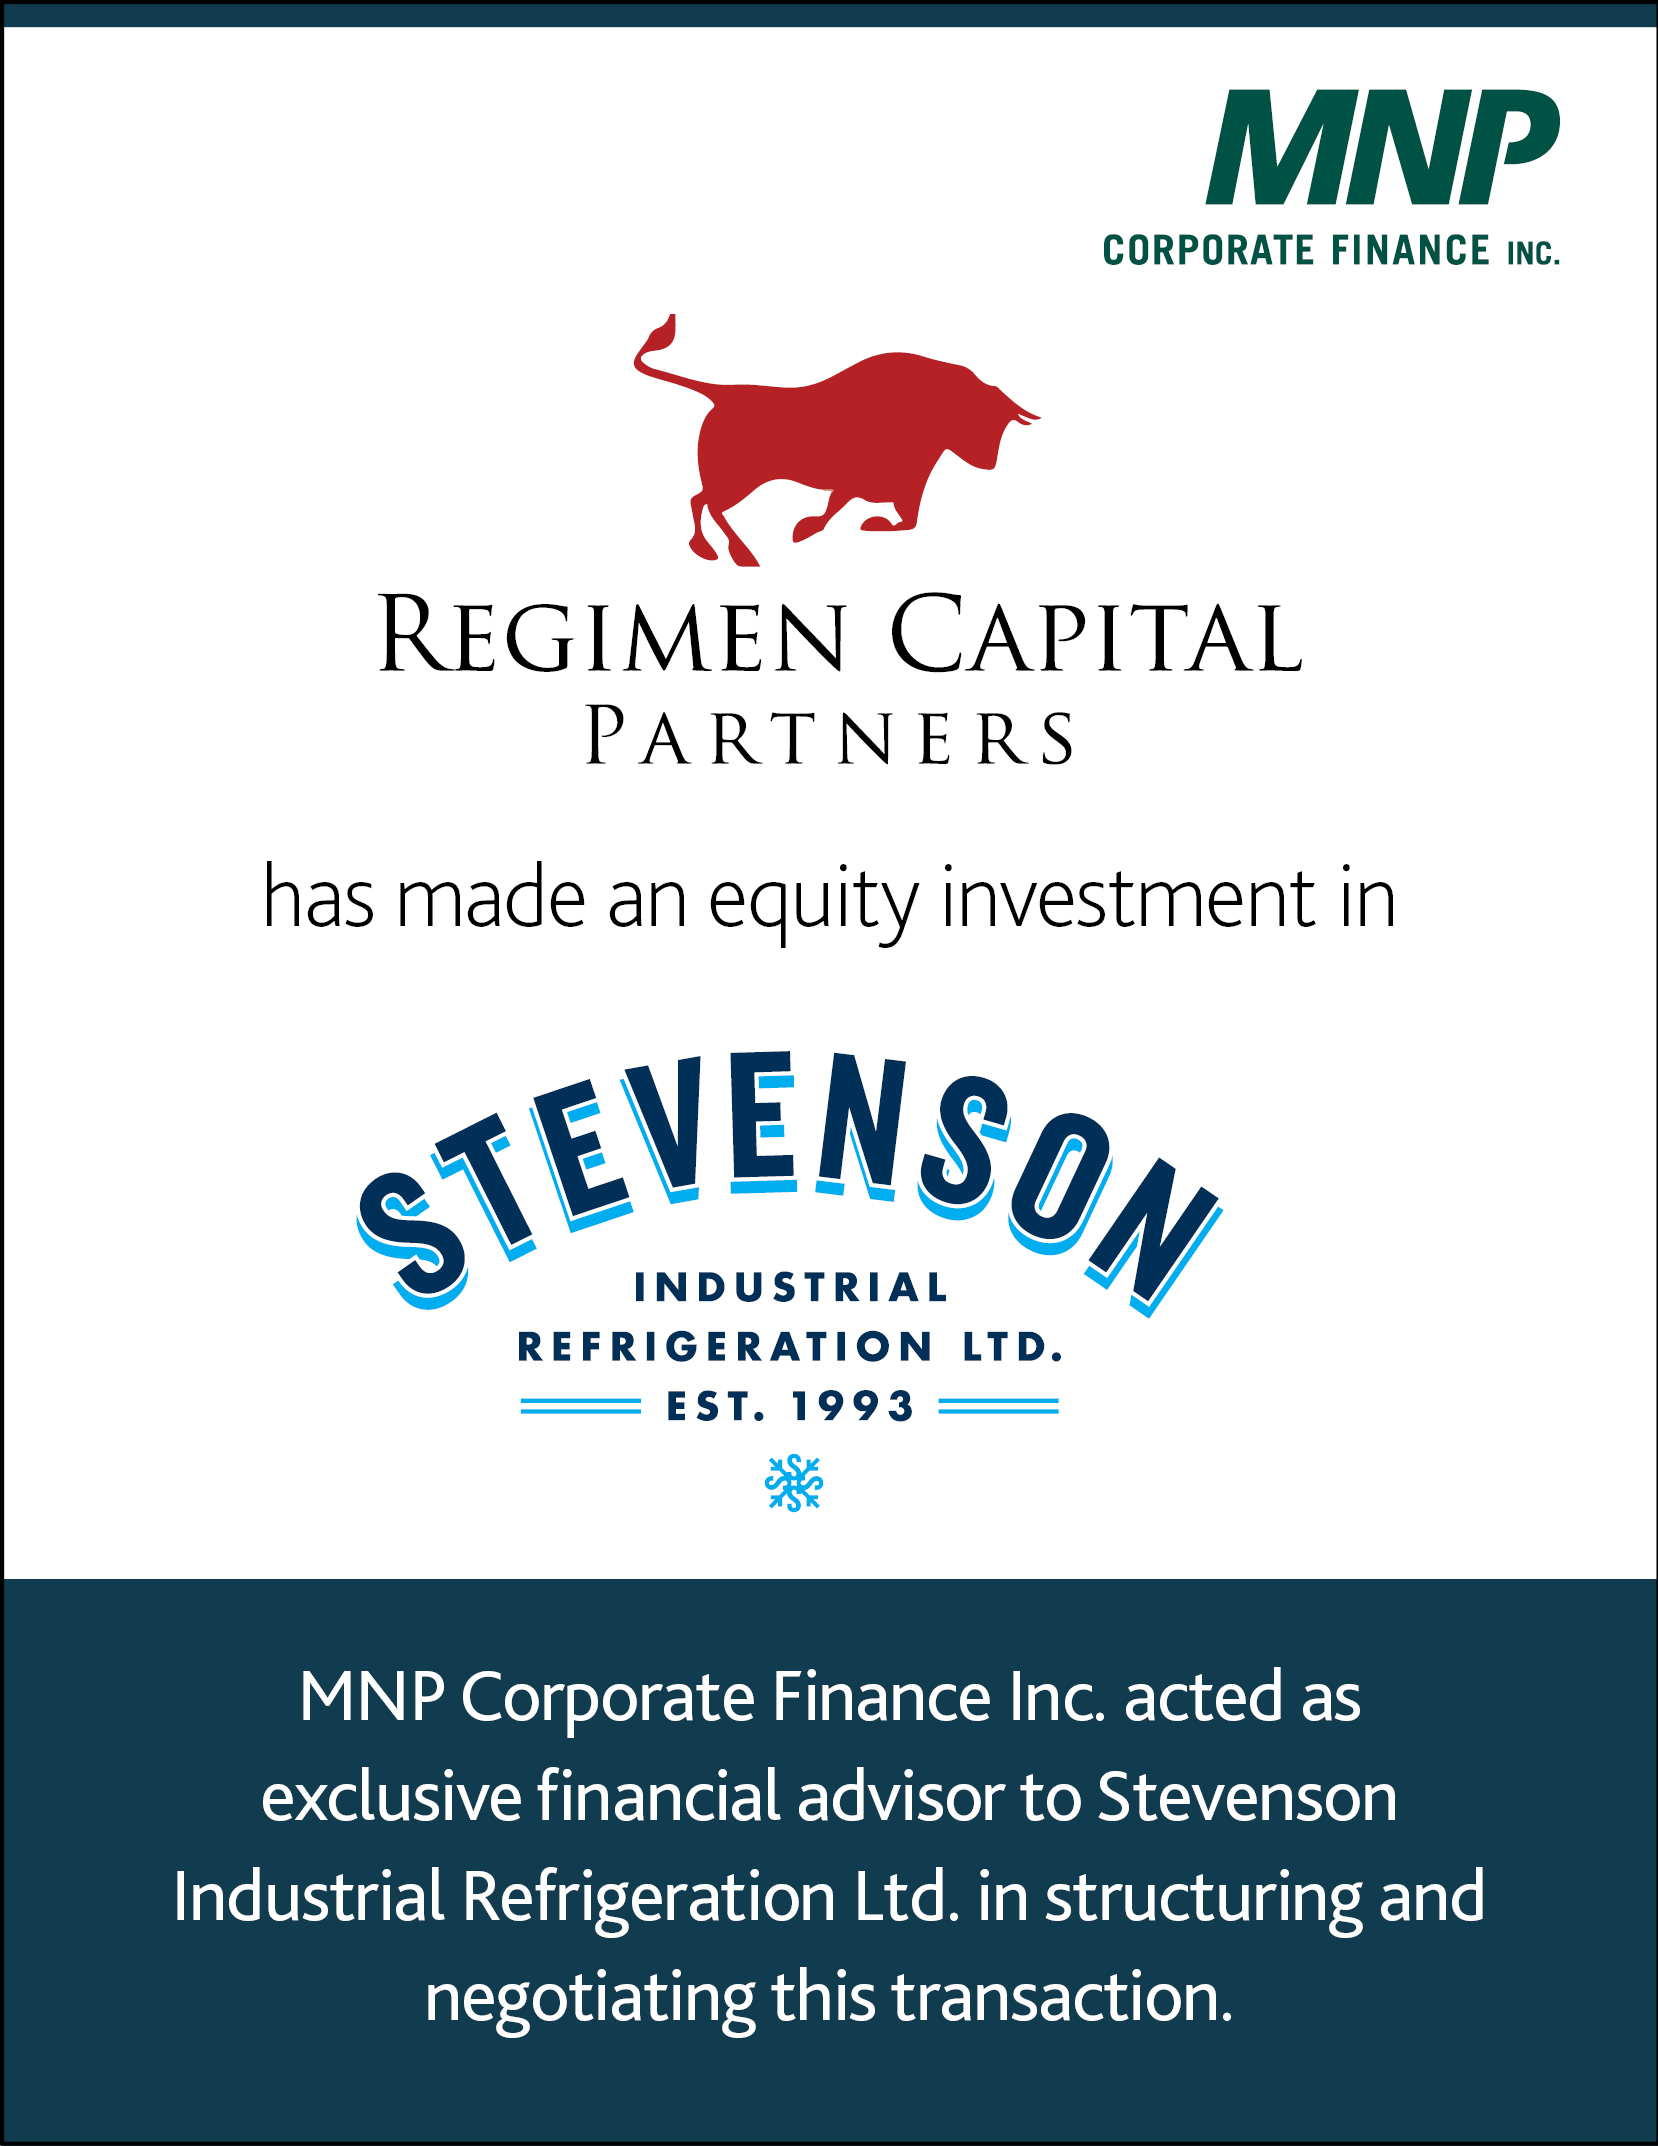 Regimen Capital Partners has made an equity investment in Stevenson Industrial Refrigeration Ltd. 